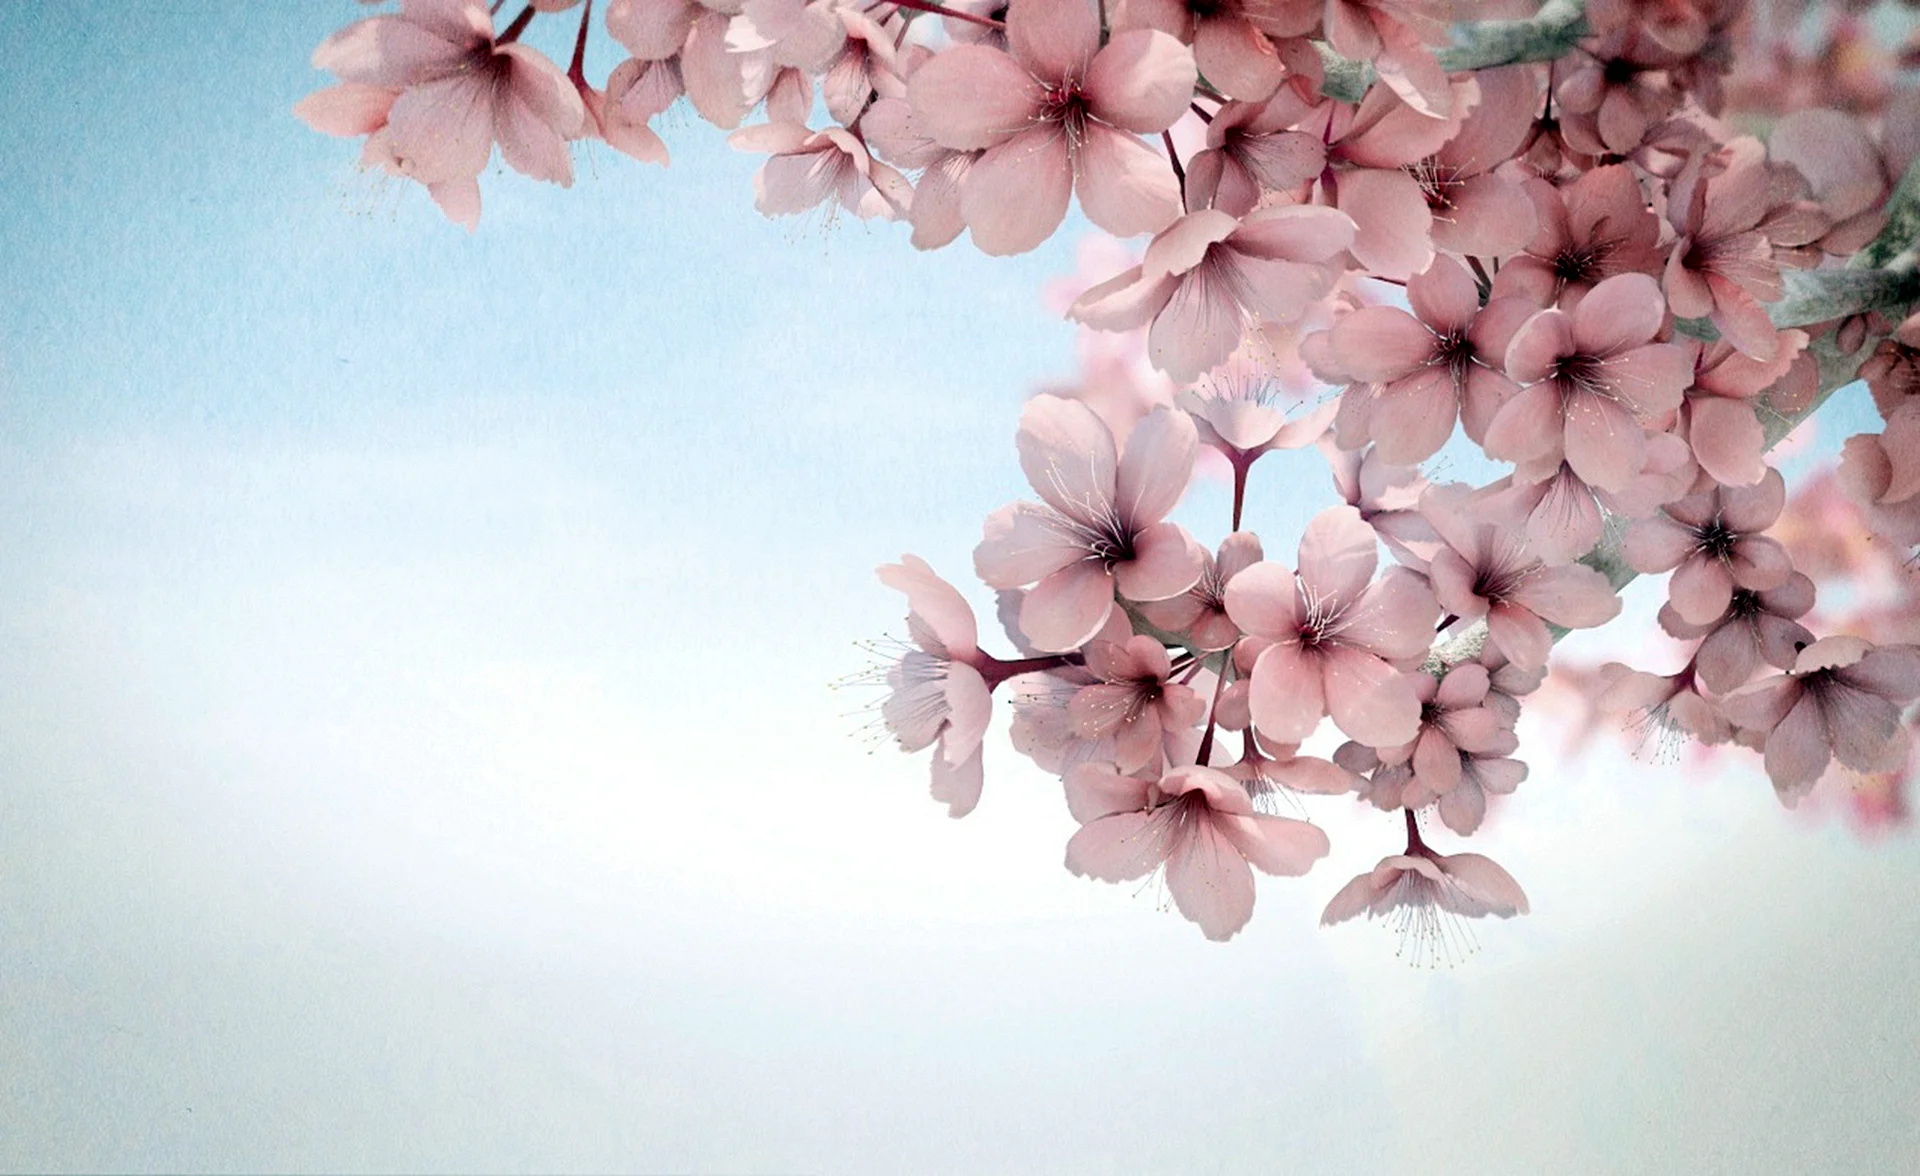 Cherry Blossom background